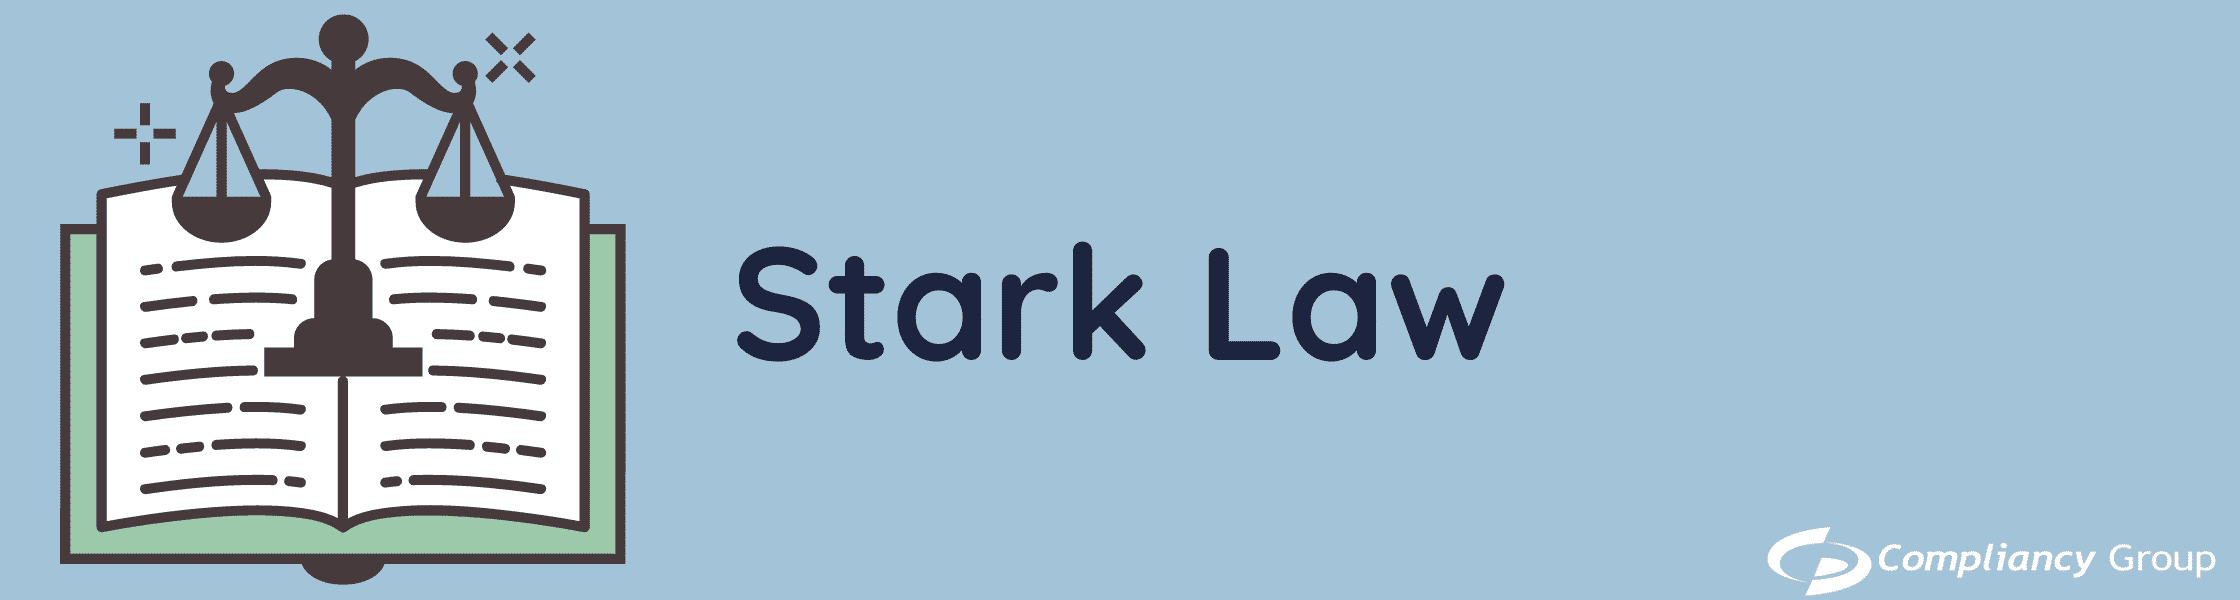 Stark Law